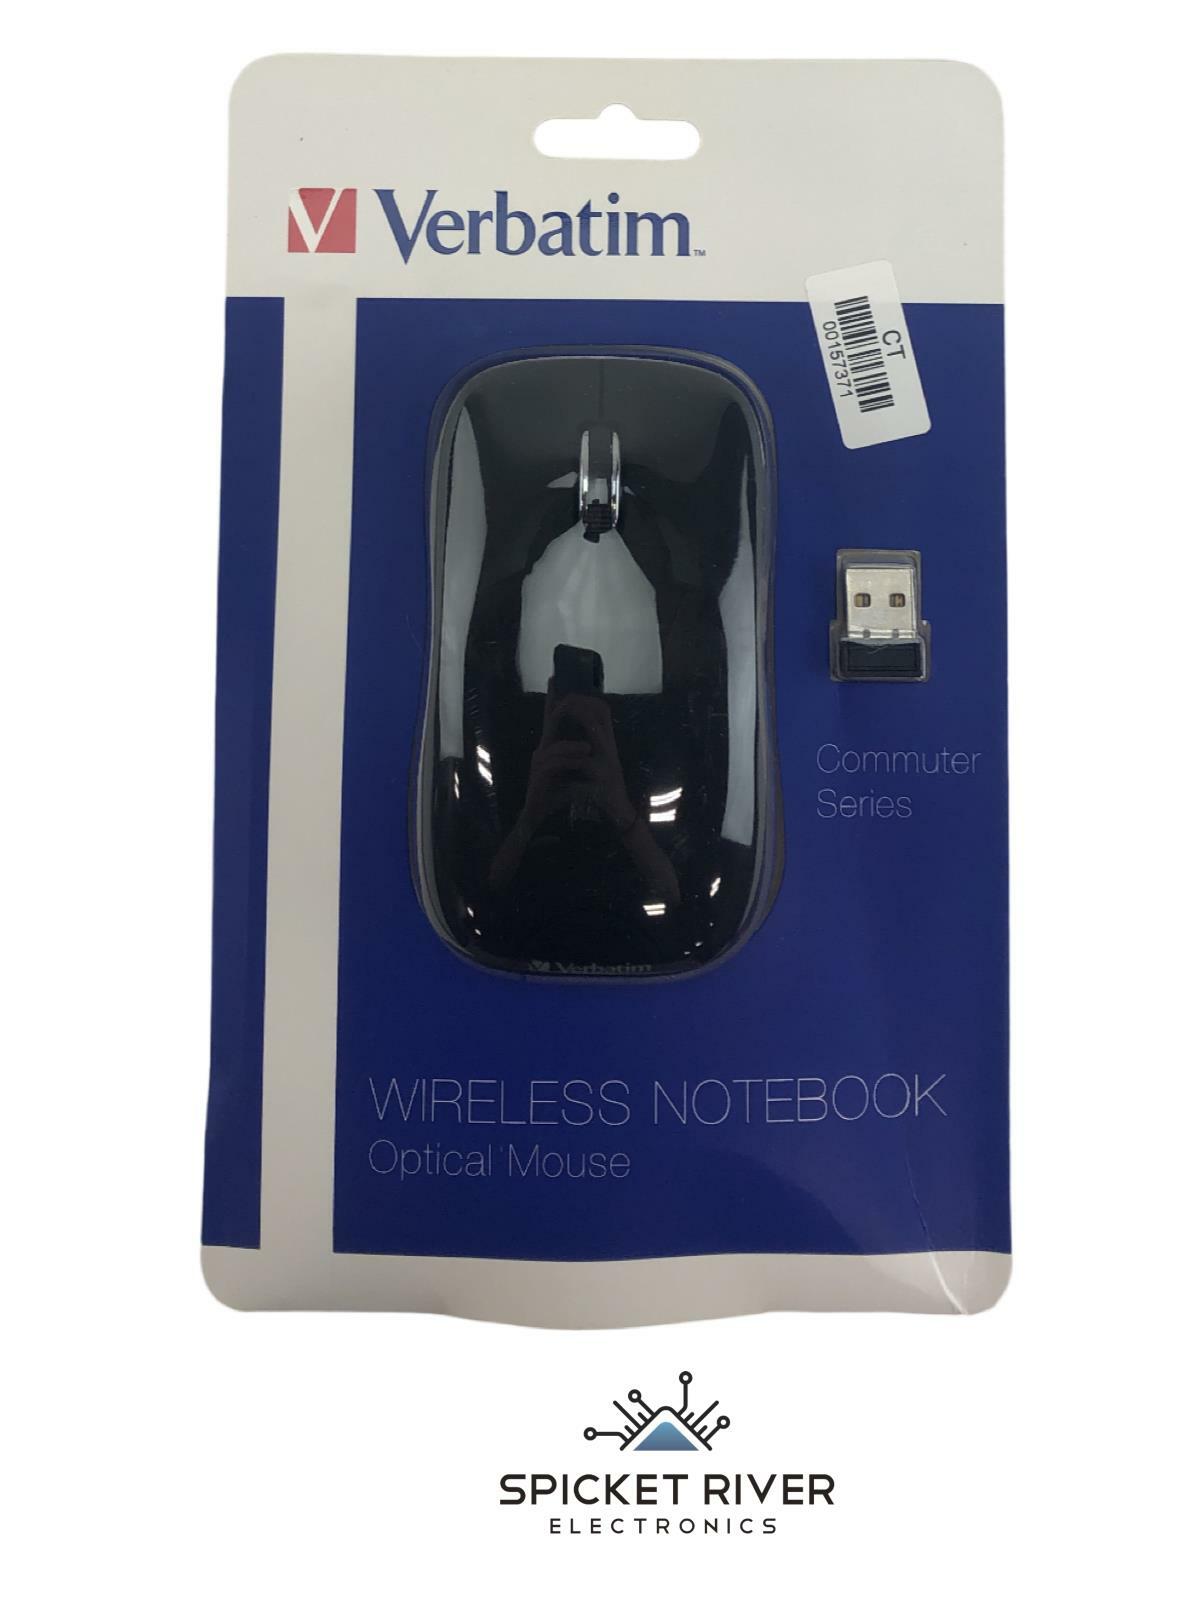 NEW - Verbatim(R) 99765 Commuter Series Wireless Notebook Optical Mouse